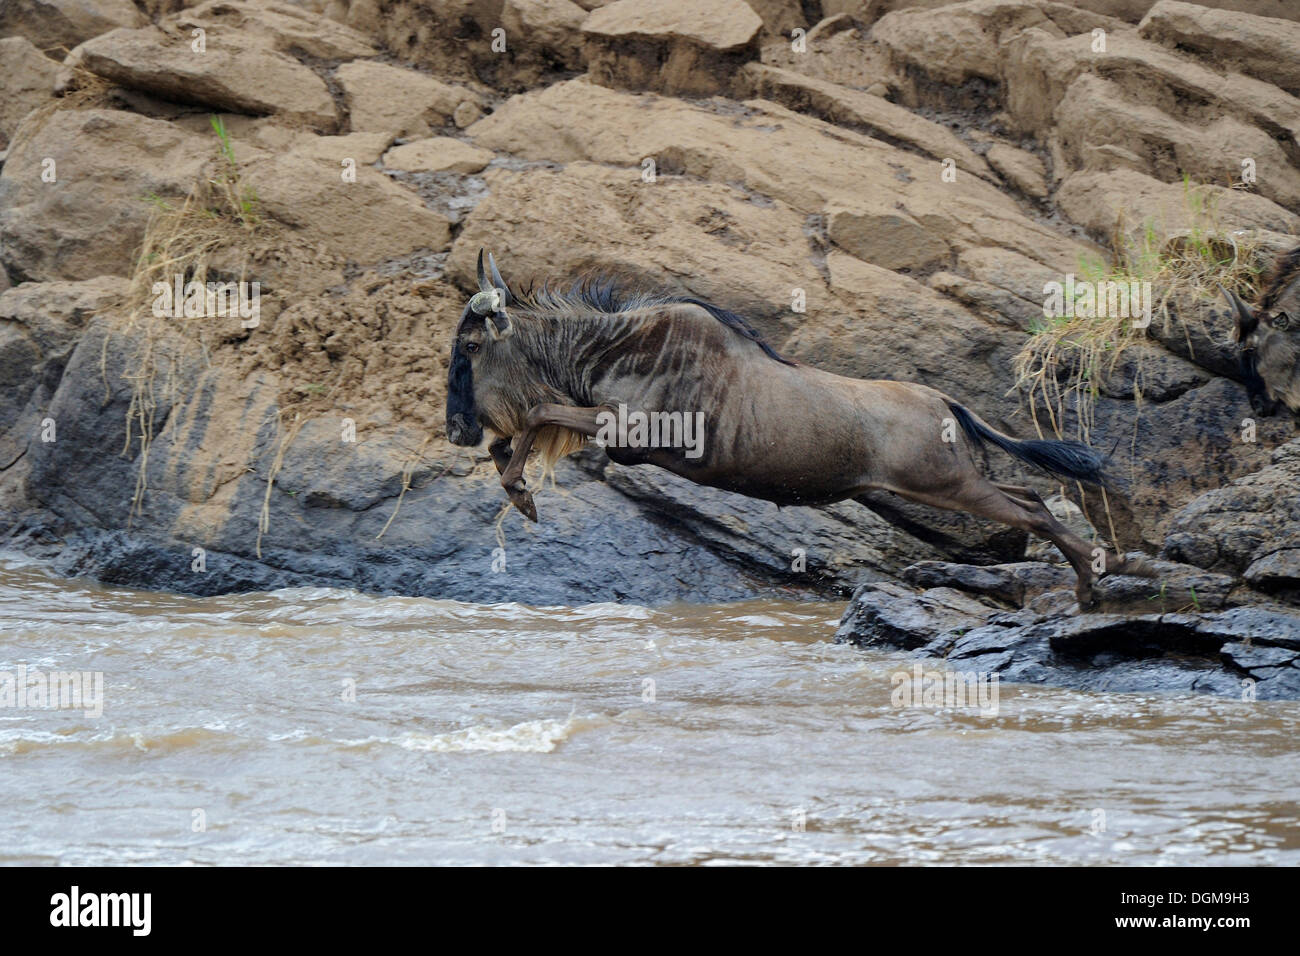 Wildebeest or Gnu (Connochaetes taurinus), jumping into the Mara River during the gnu migration, Masai Mara, Kenya, Africa Stock Photo